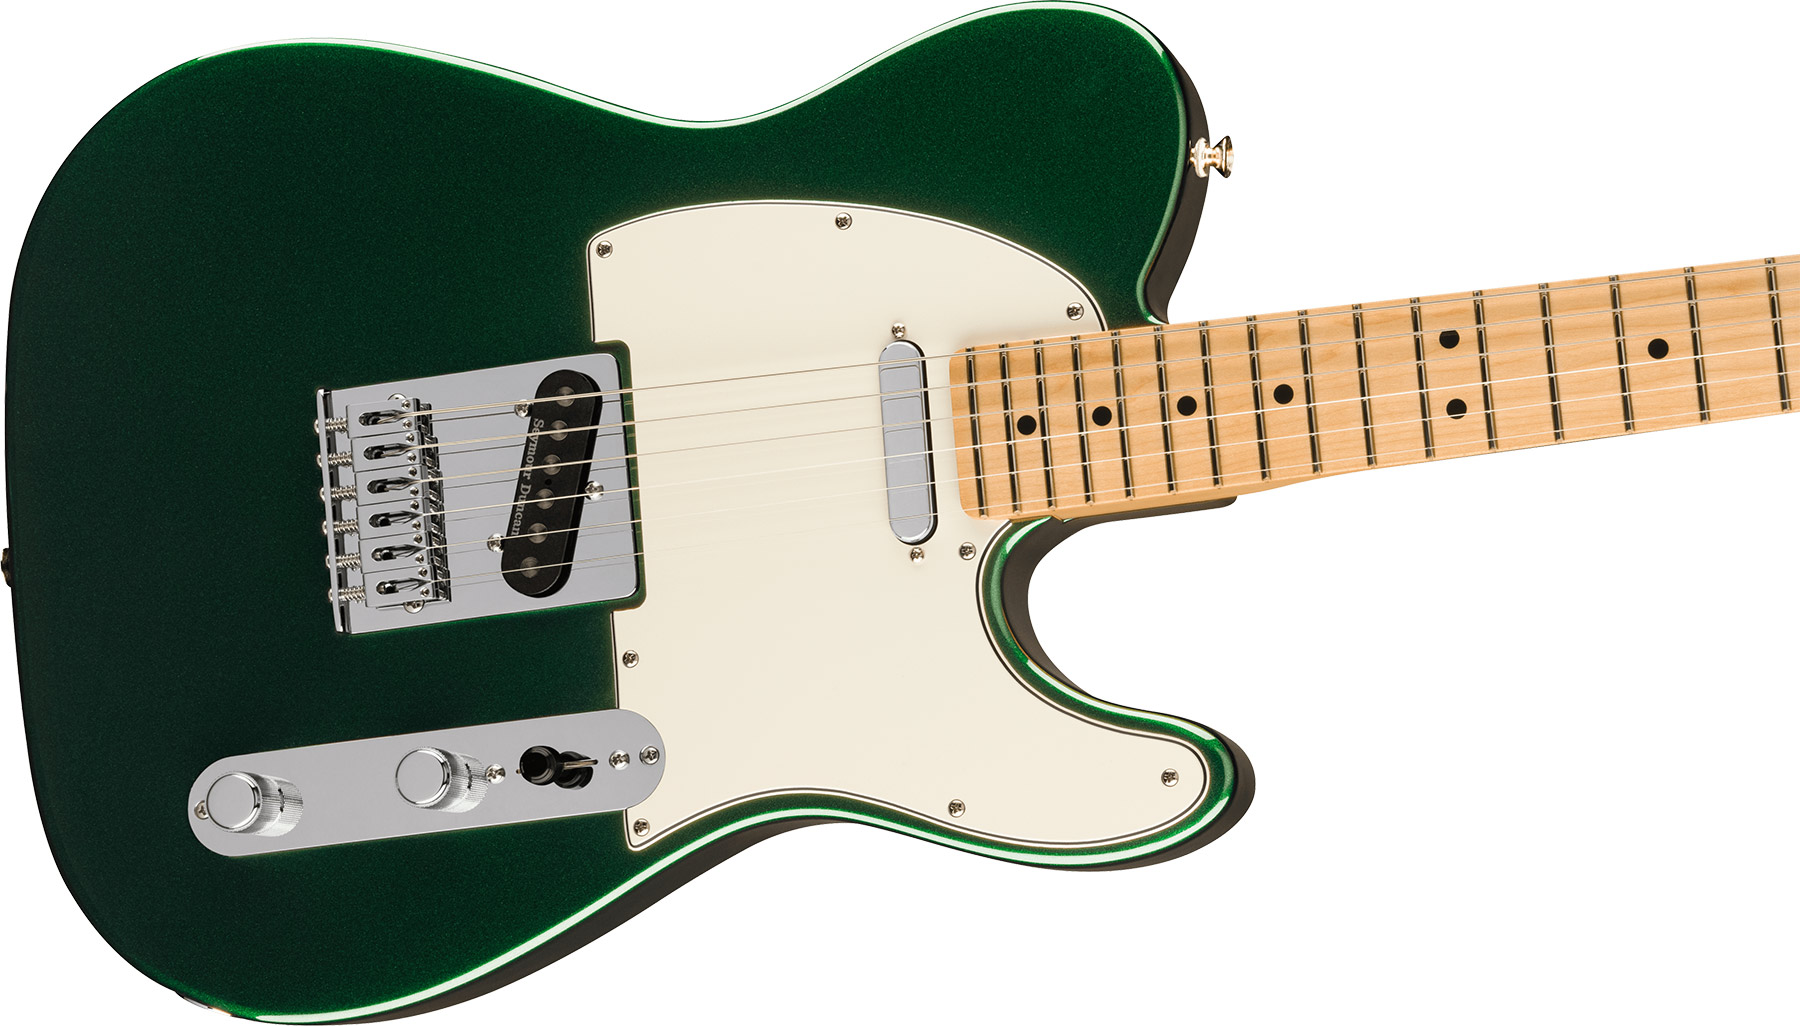 Fender Tele Player Ltd Mex 2s Seymour Duncan Mn - British Racing Green - Guitare Électrique Forme Tel - Variation 2